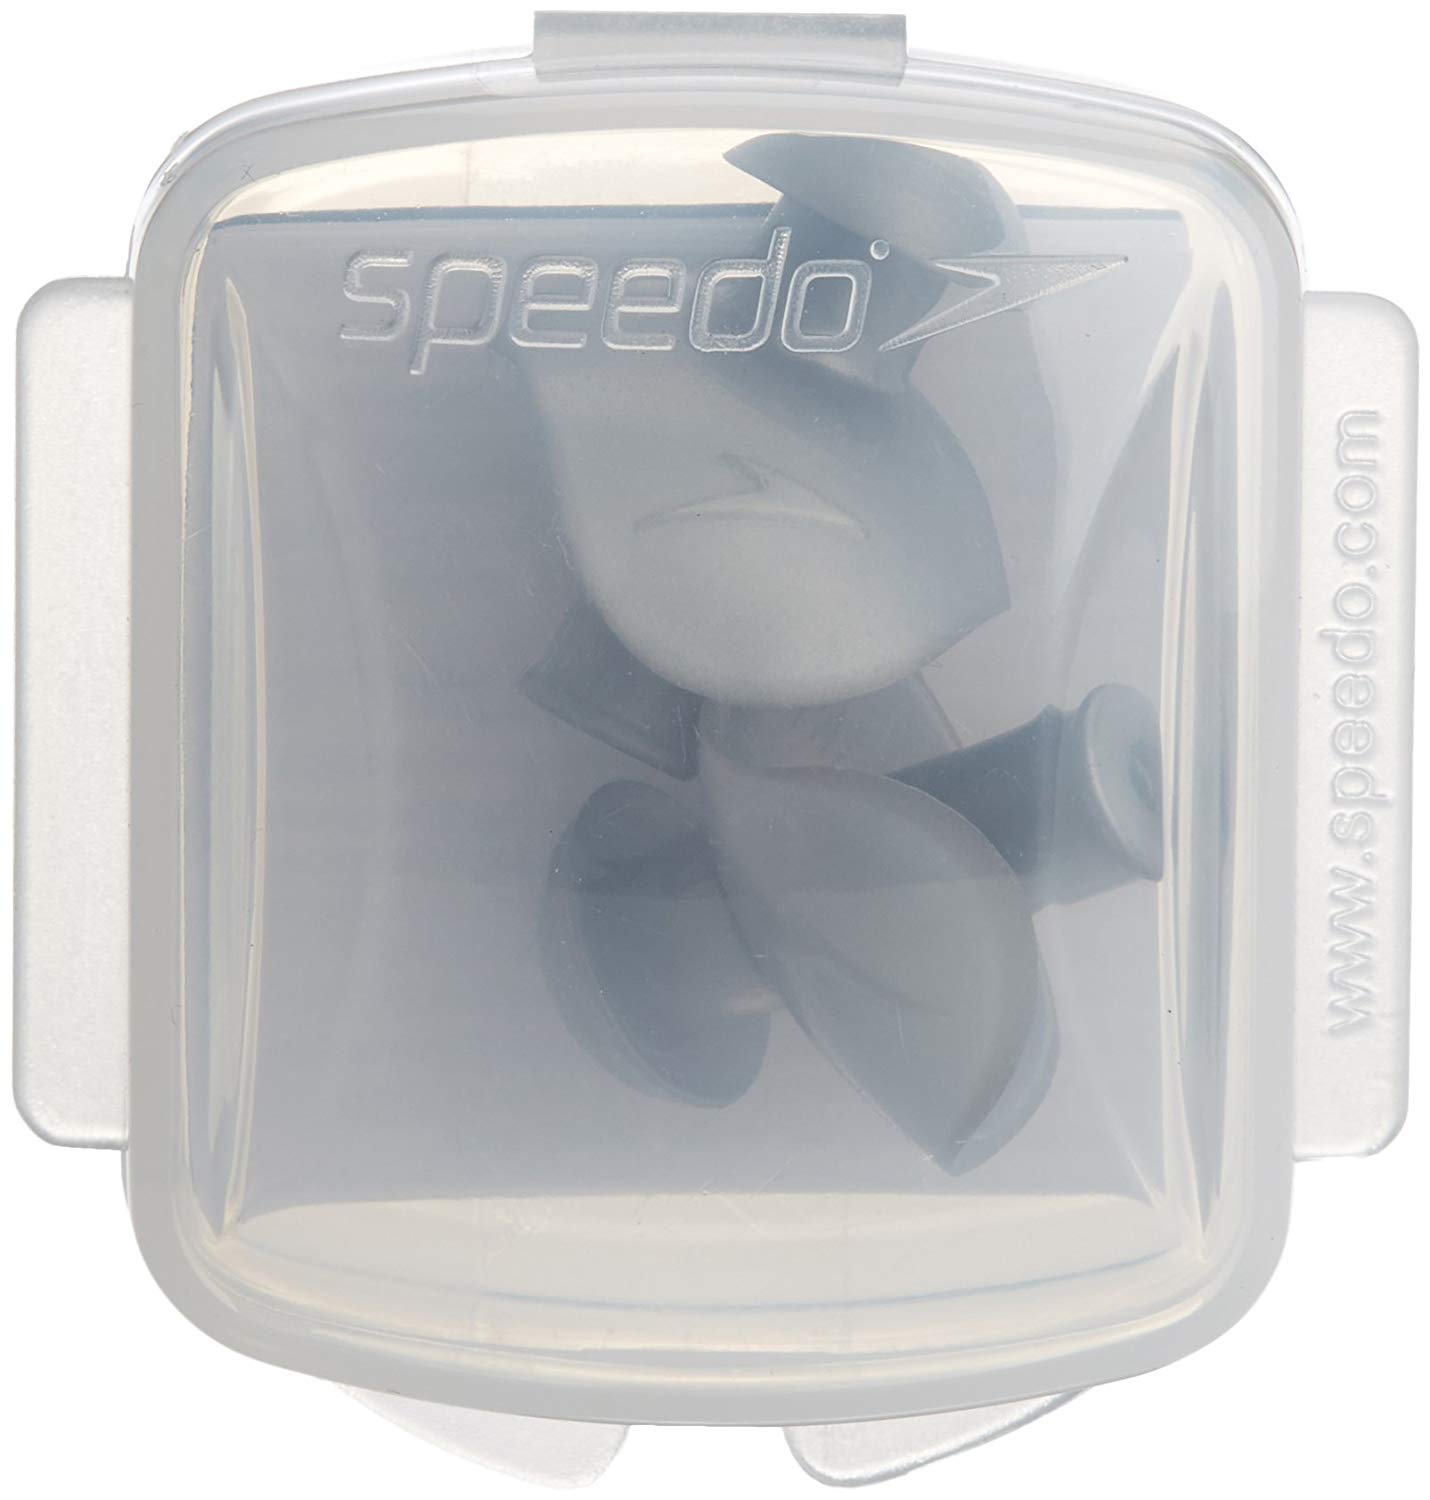 Speedo Jet Ear Plug (Assorted) - Best Price online Prokicksports.com